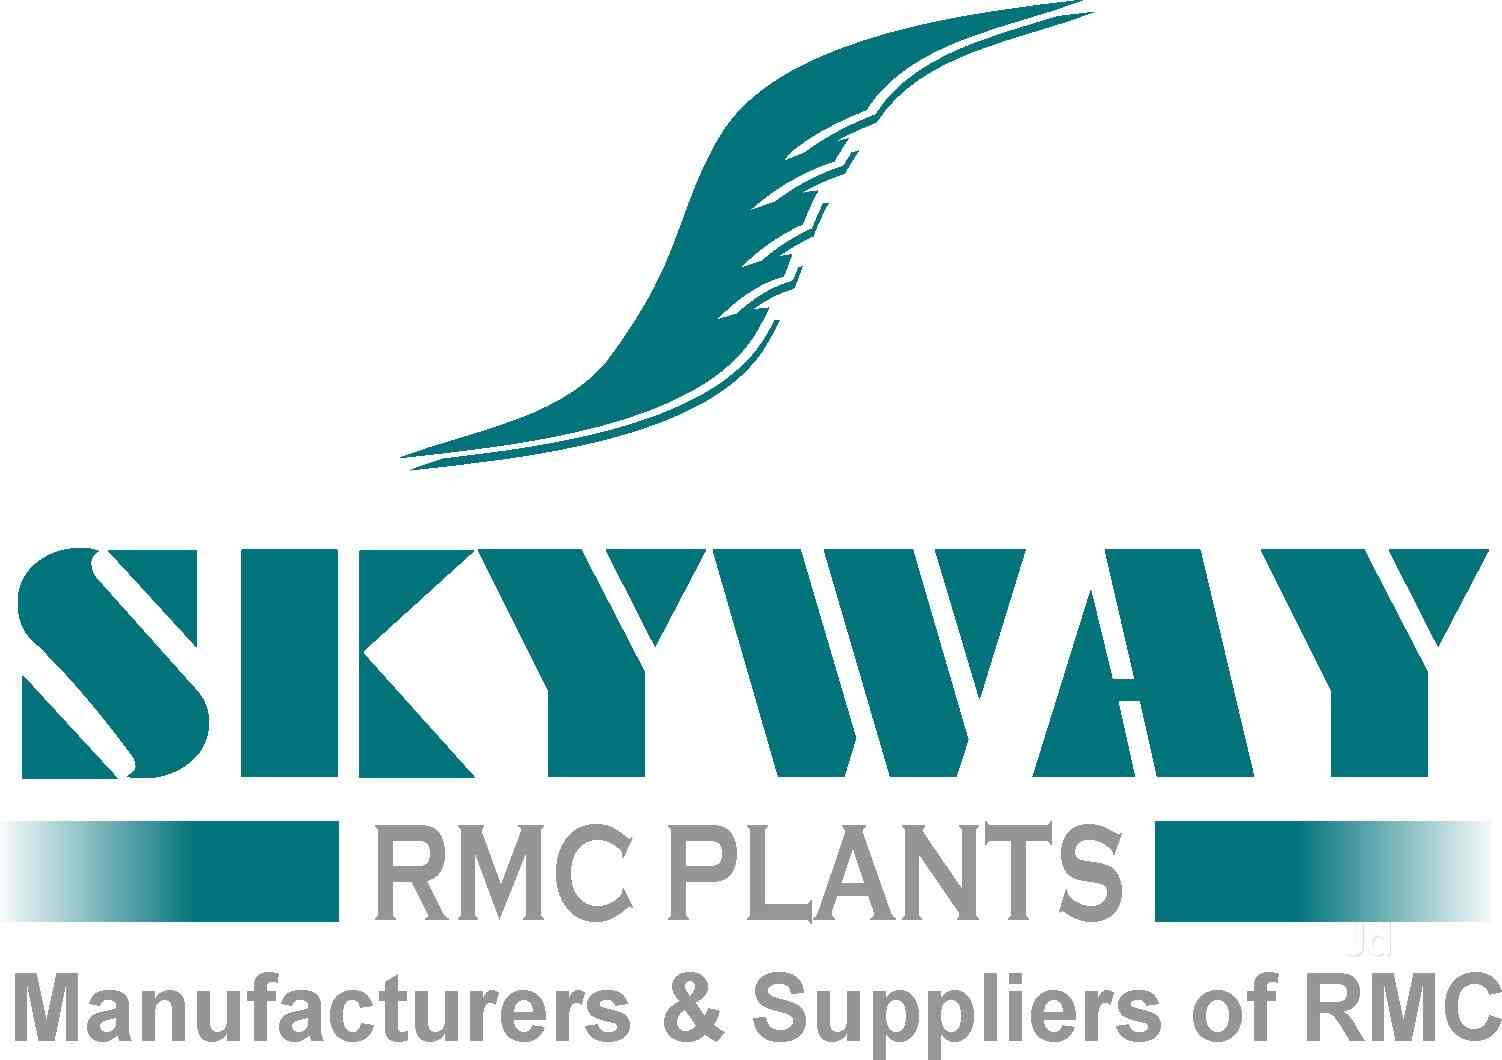 Skyway Rmc Plants